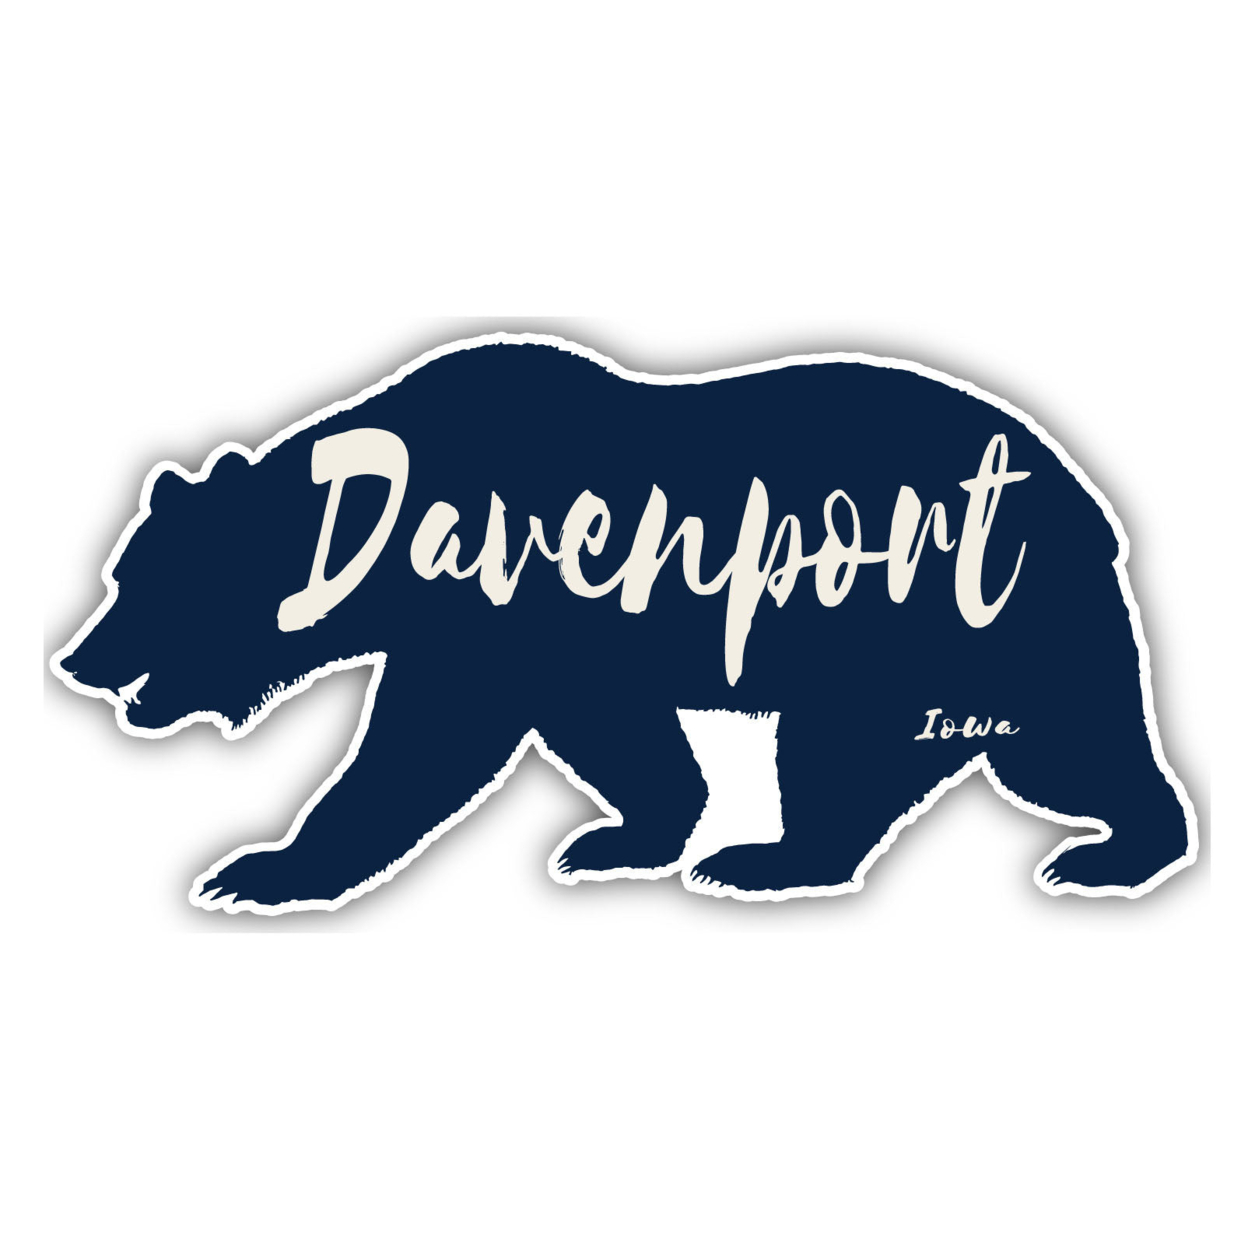 Davenport Iowa Souvenir Decorative Stickers (Choose Theme And Size) - 4-Pack, 4-Inch, Bear